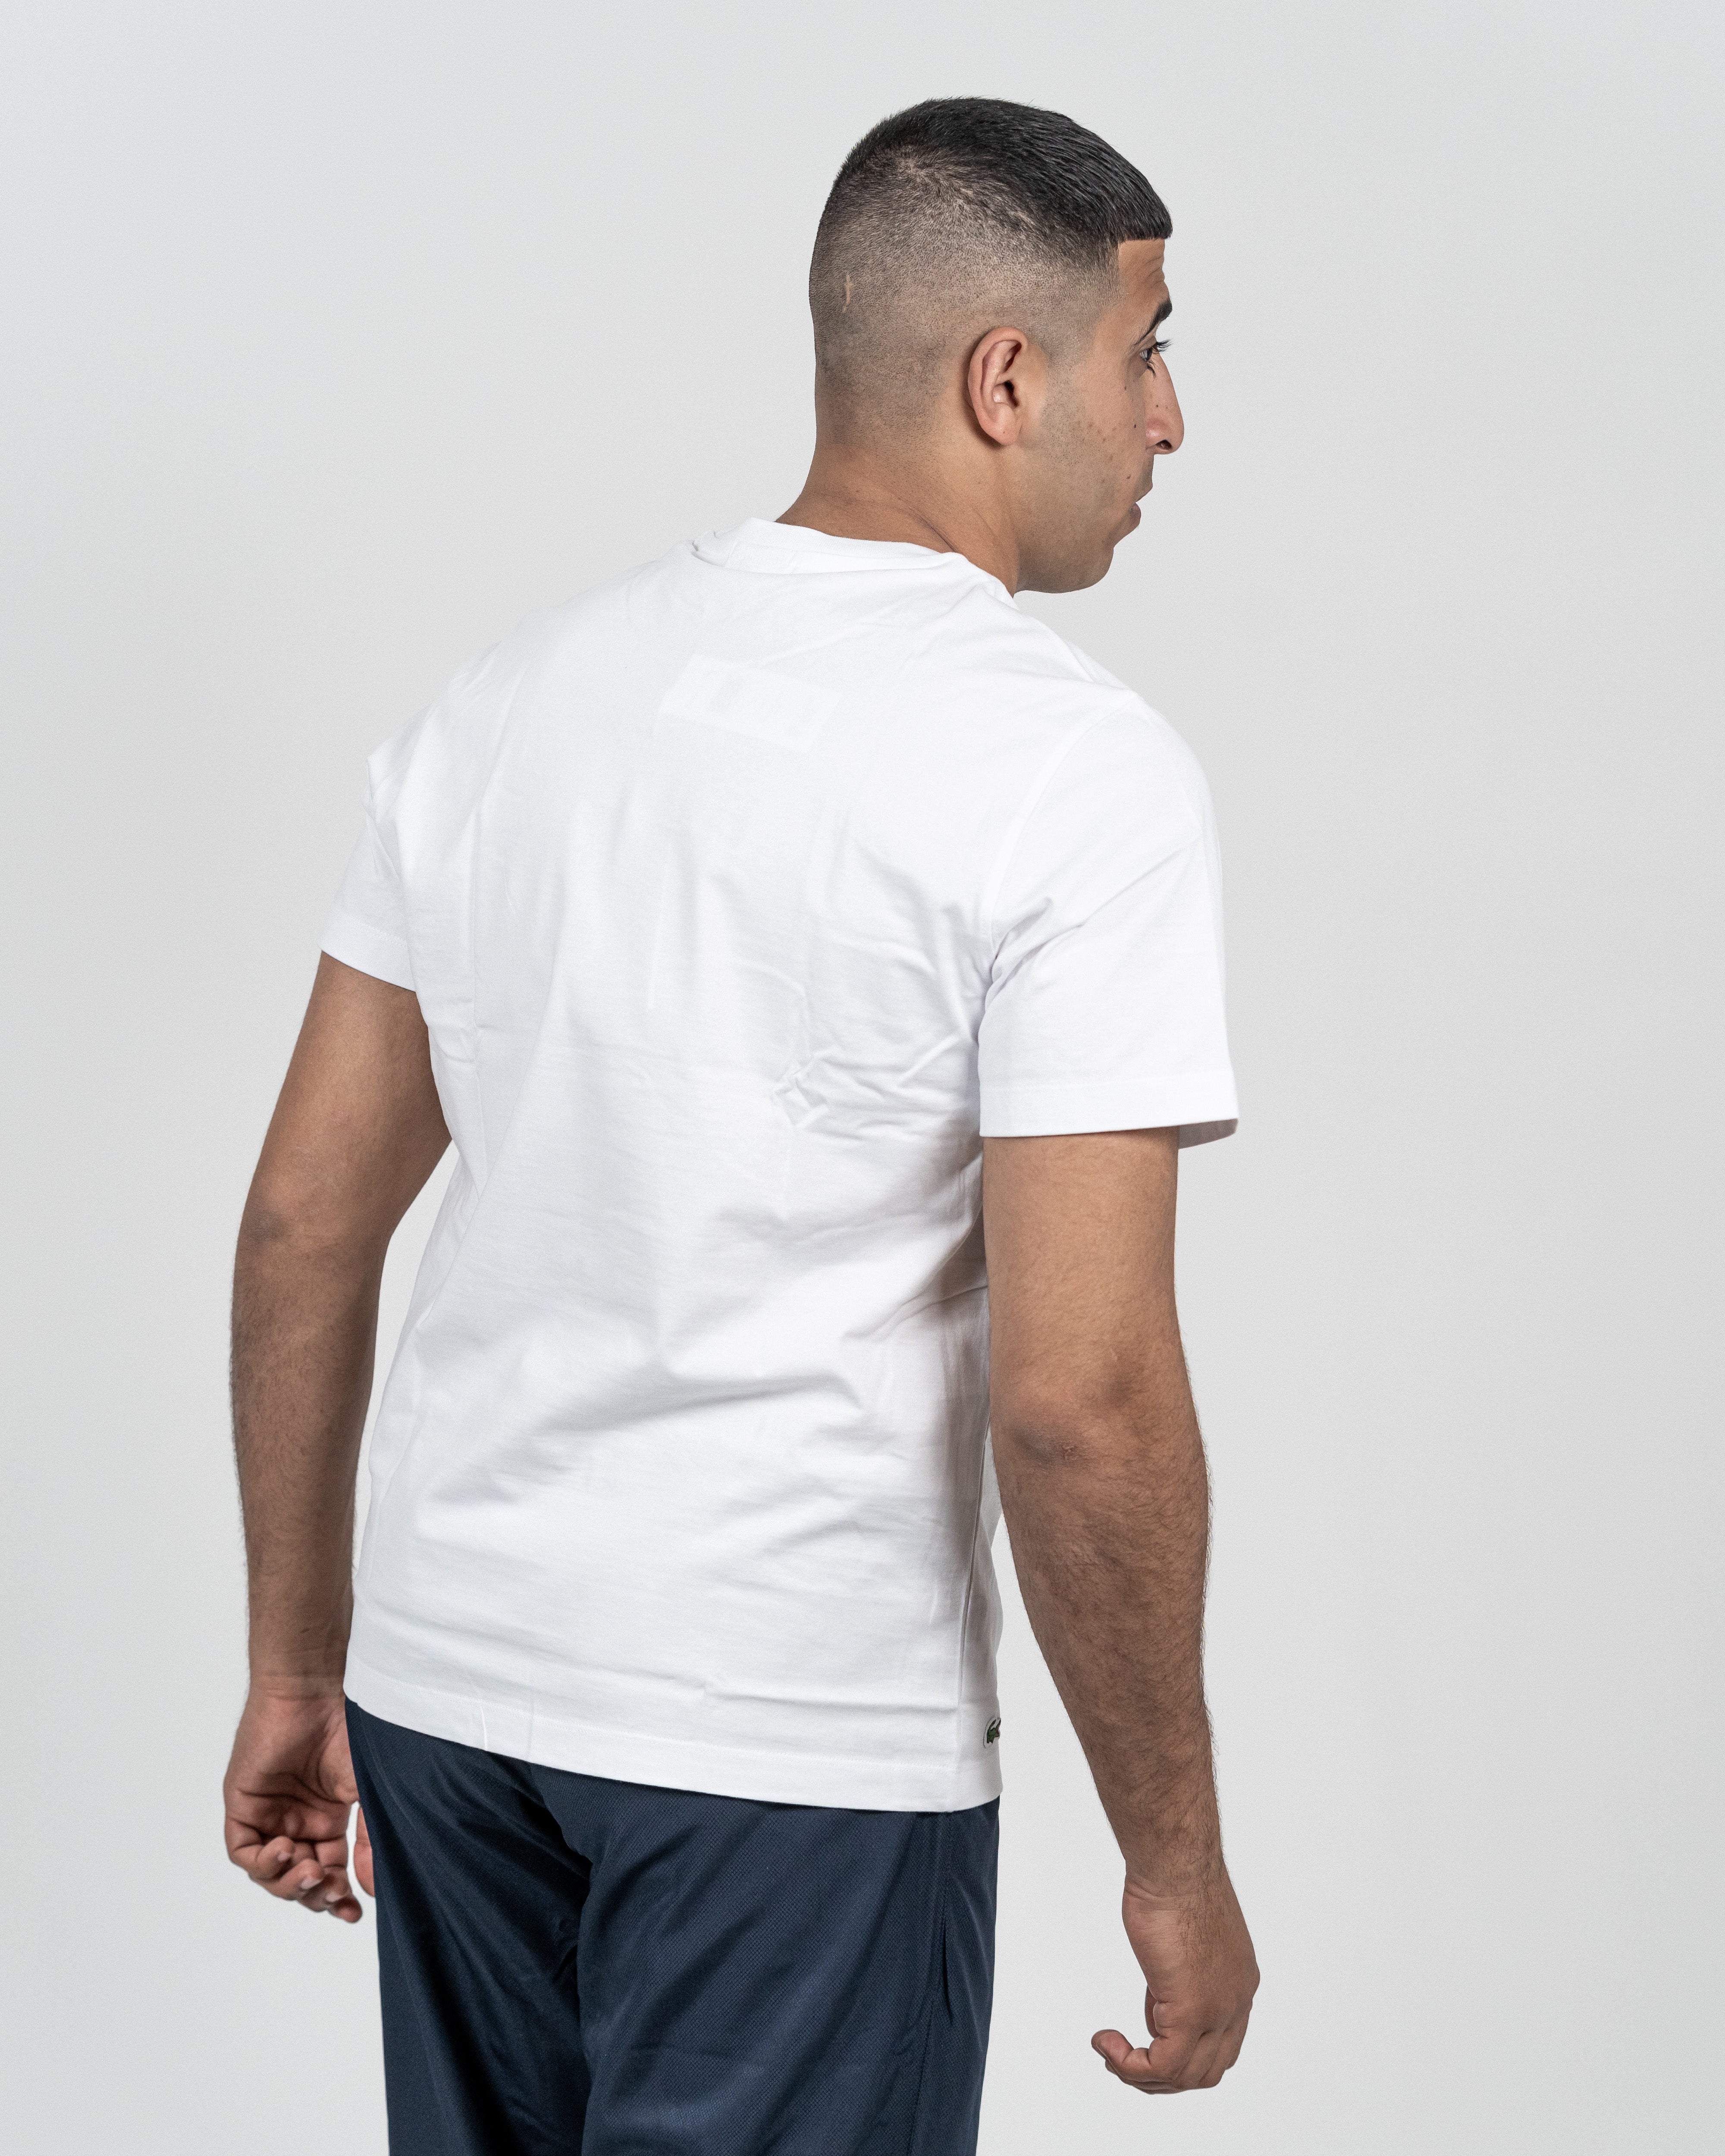 Lacoste Unisex T-shirt Hvid m/Krokodille